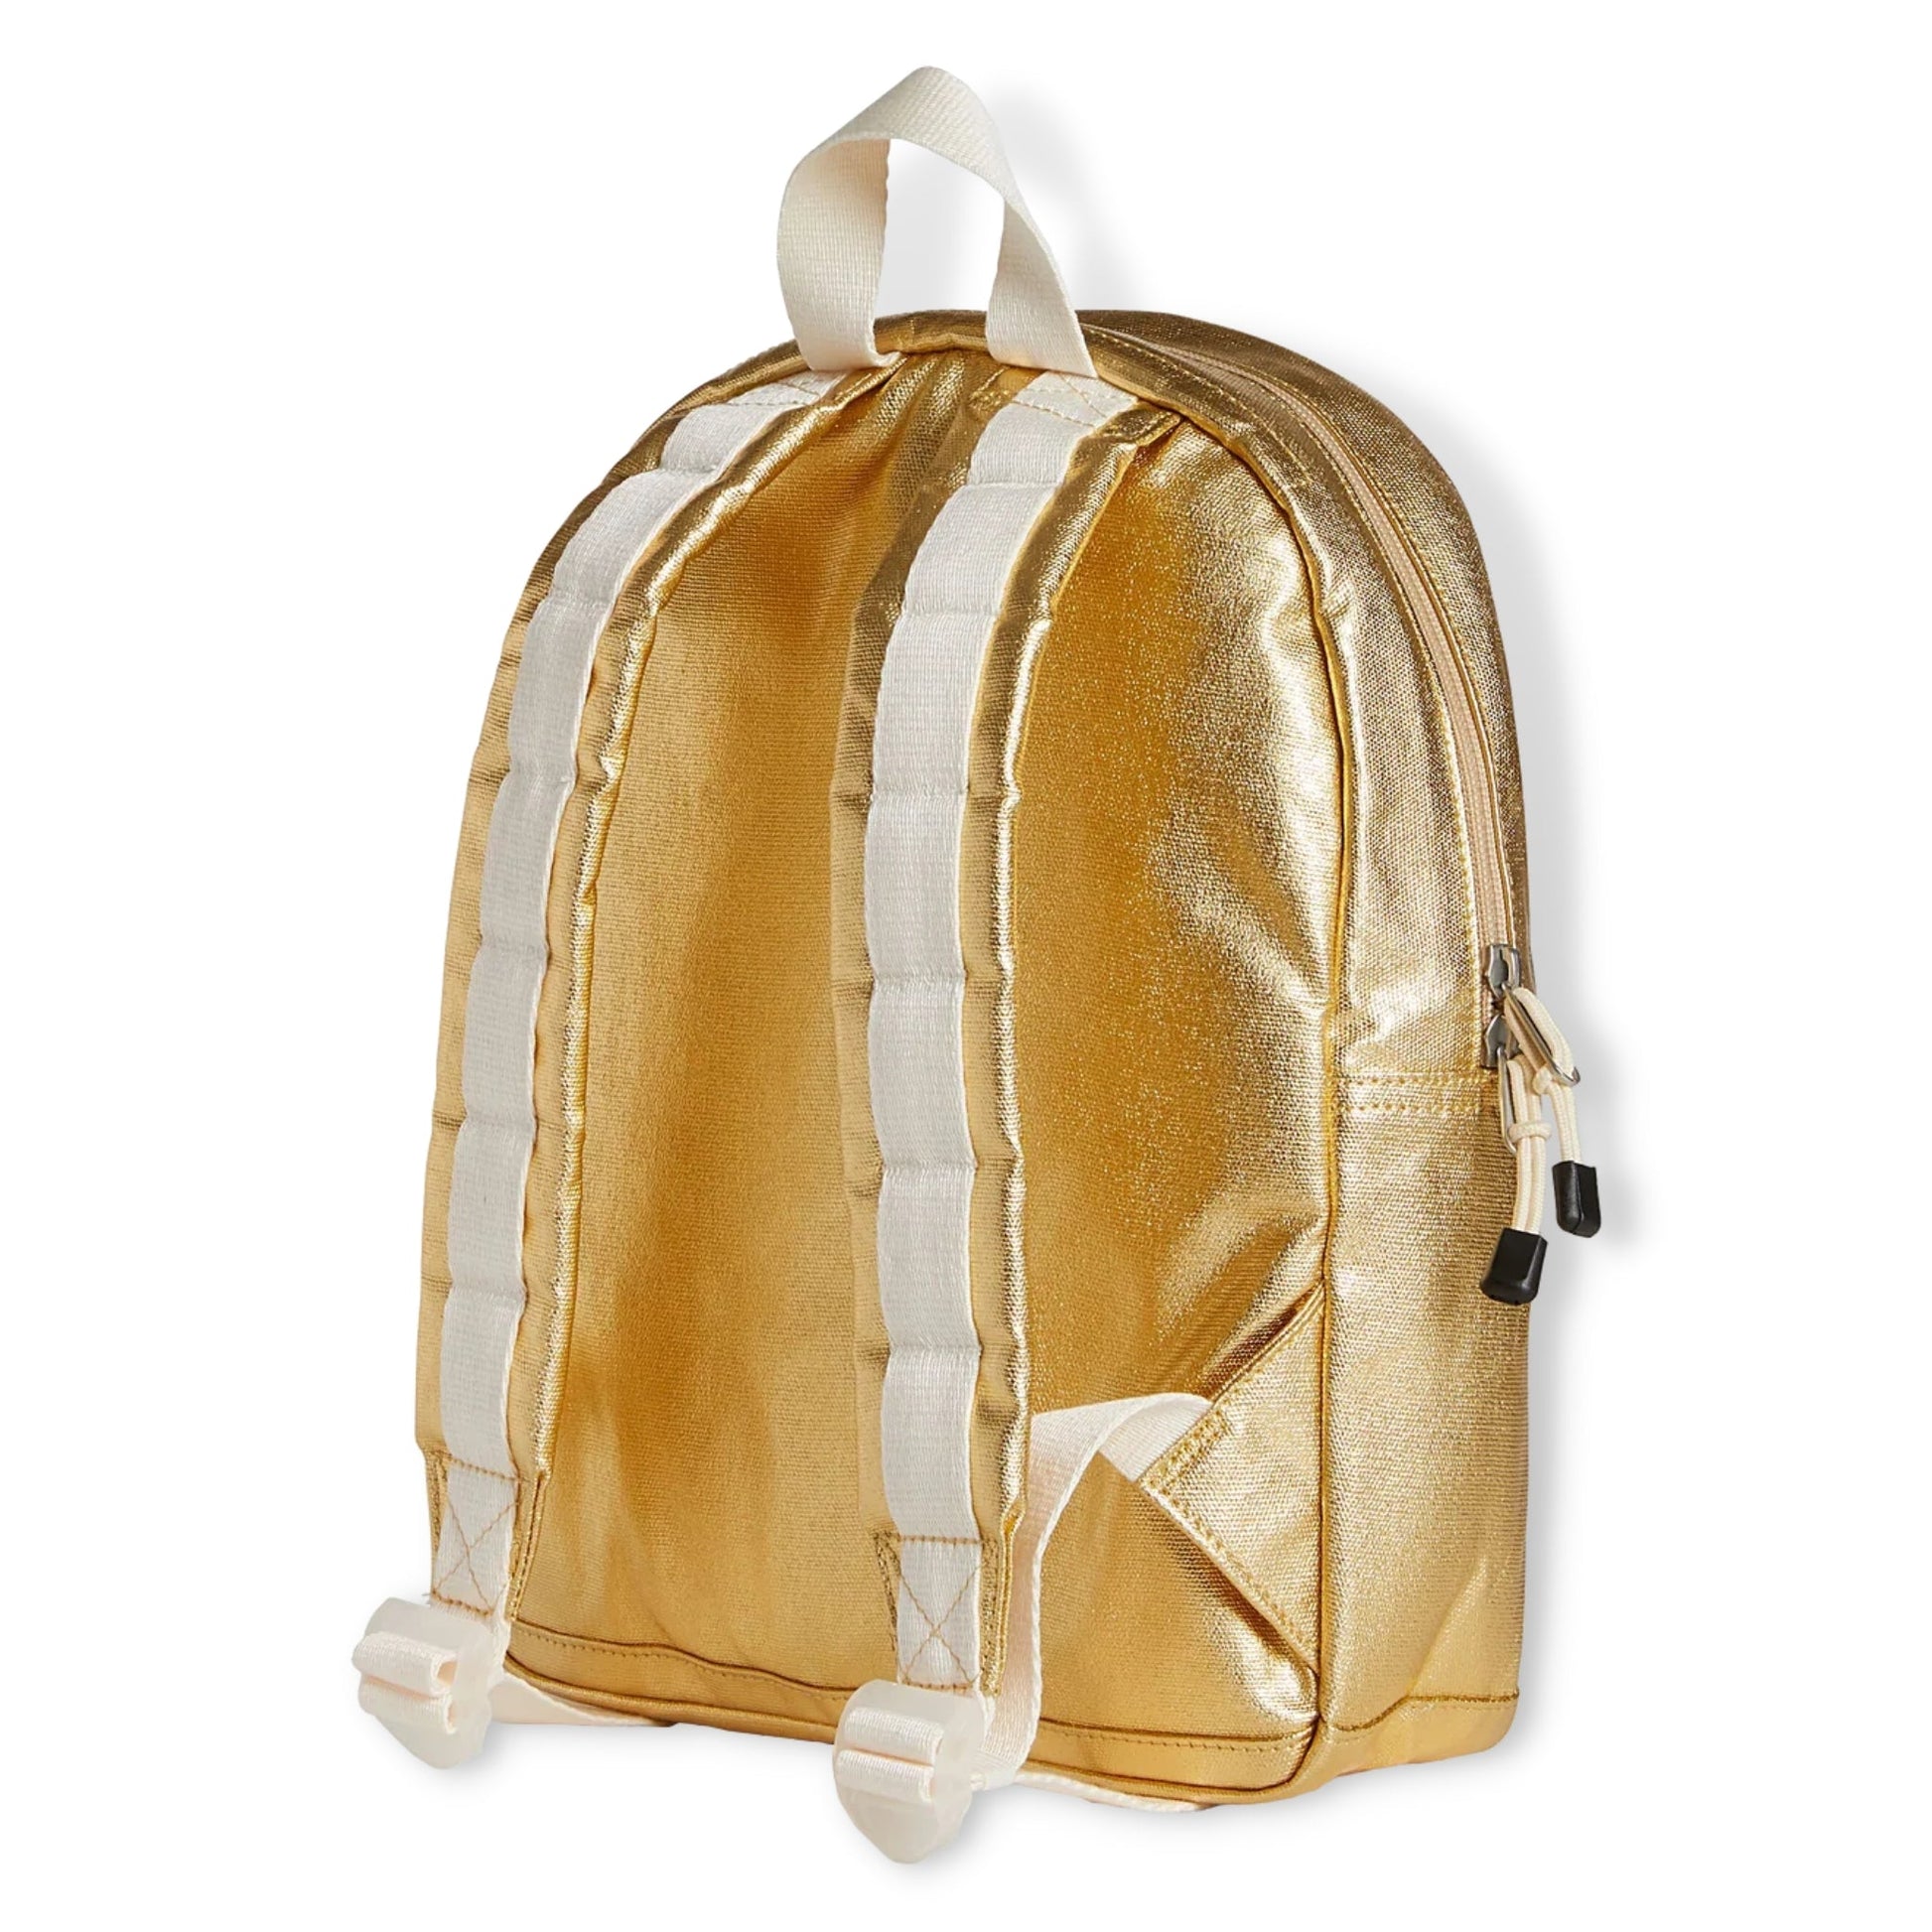 Statebags Gold Kane Kids Mini - a Spirit Animal - Bags active June 2023 Bags gold